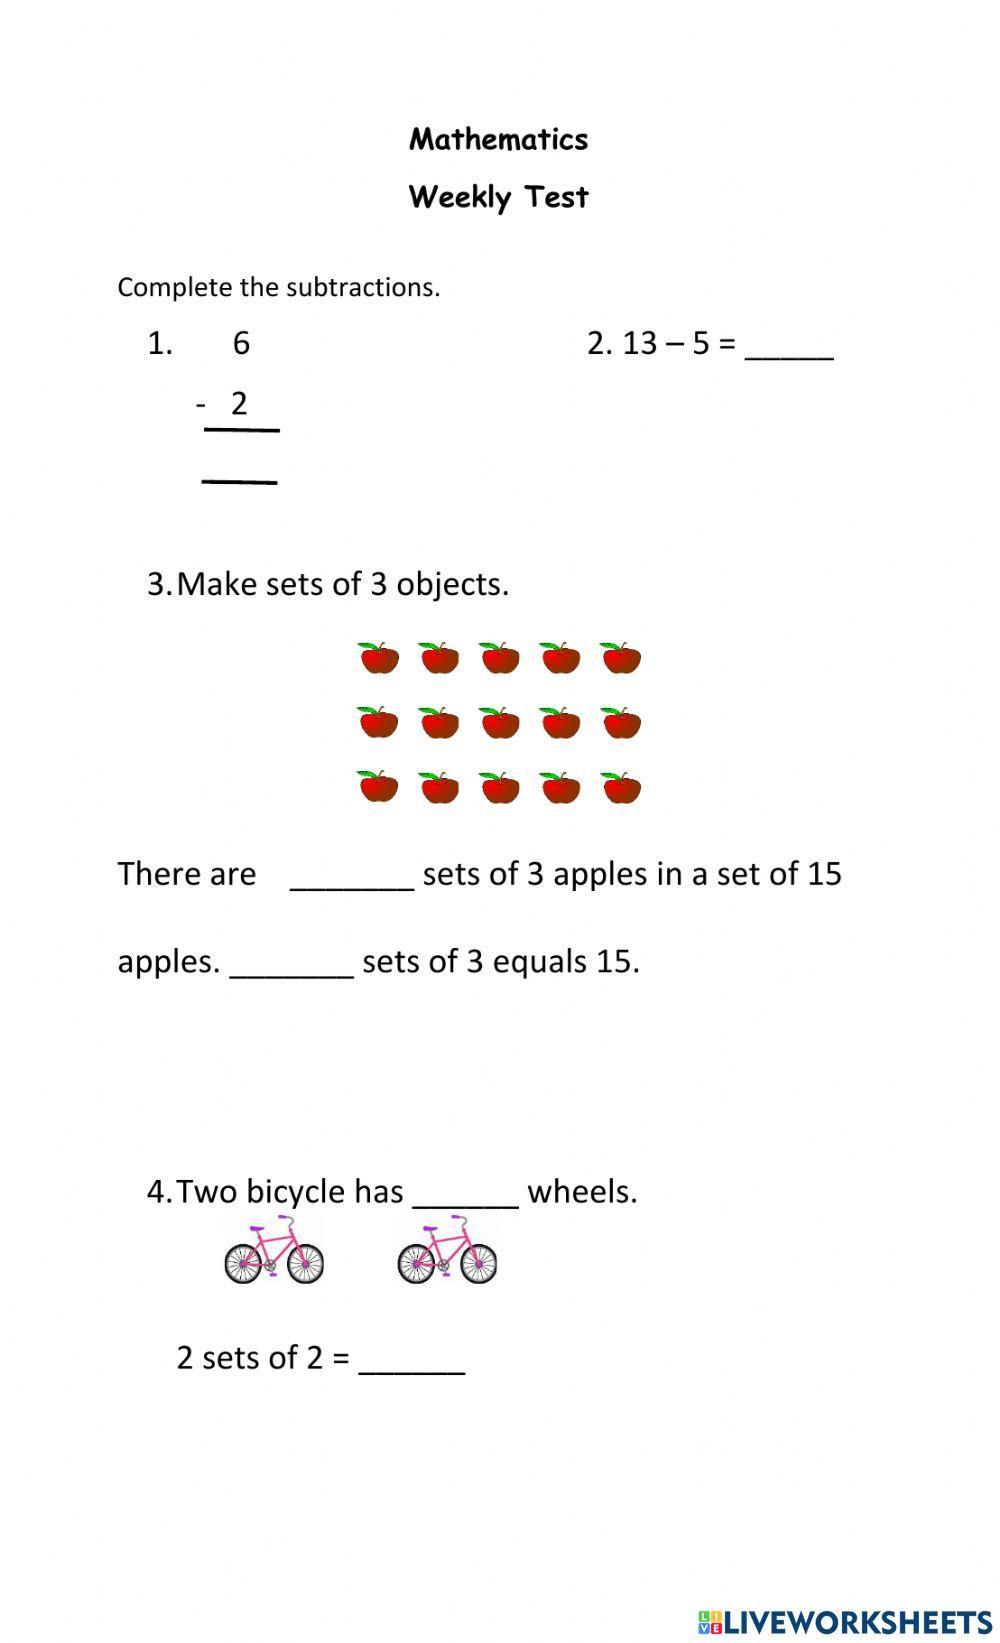 Mathematics Weekly Test